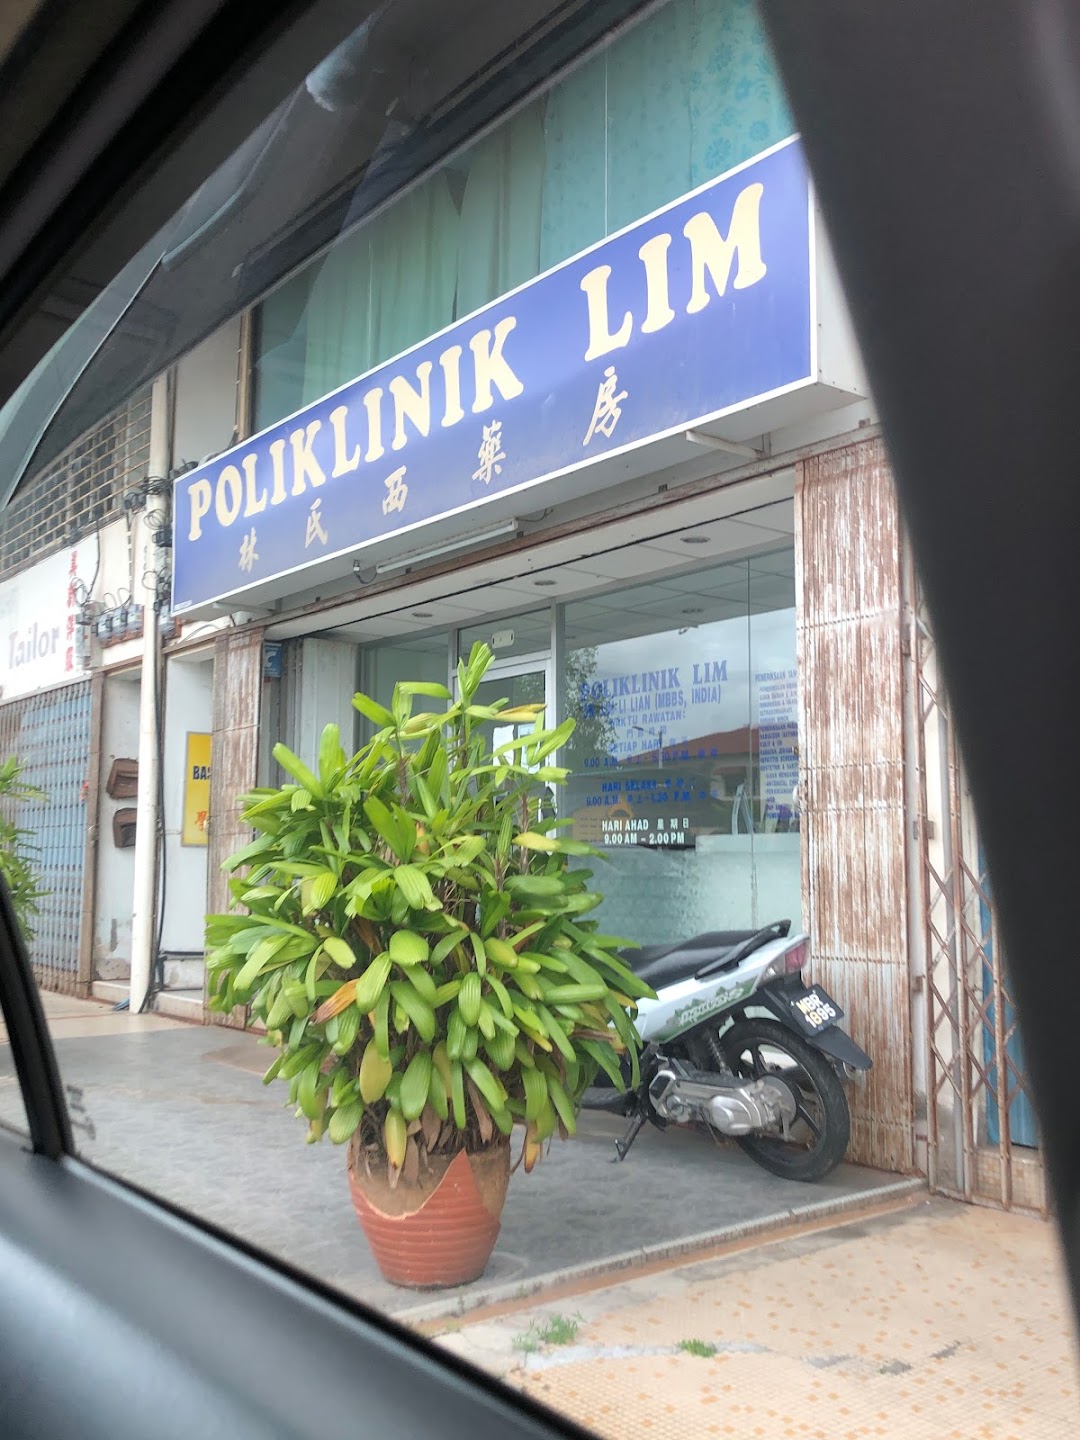 Poliklinik Lim